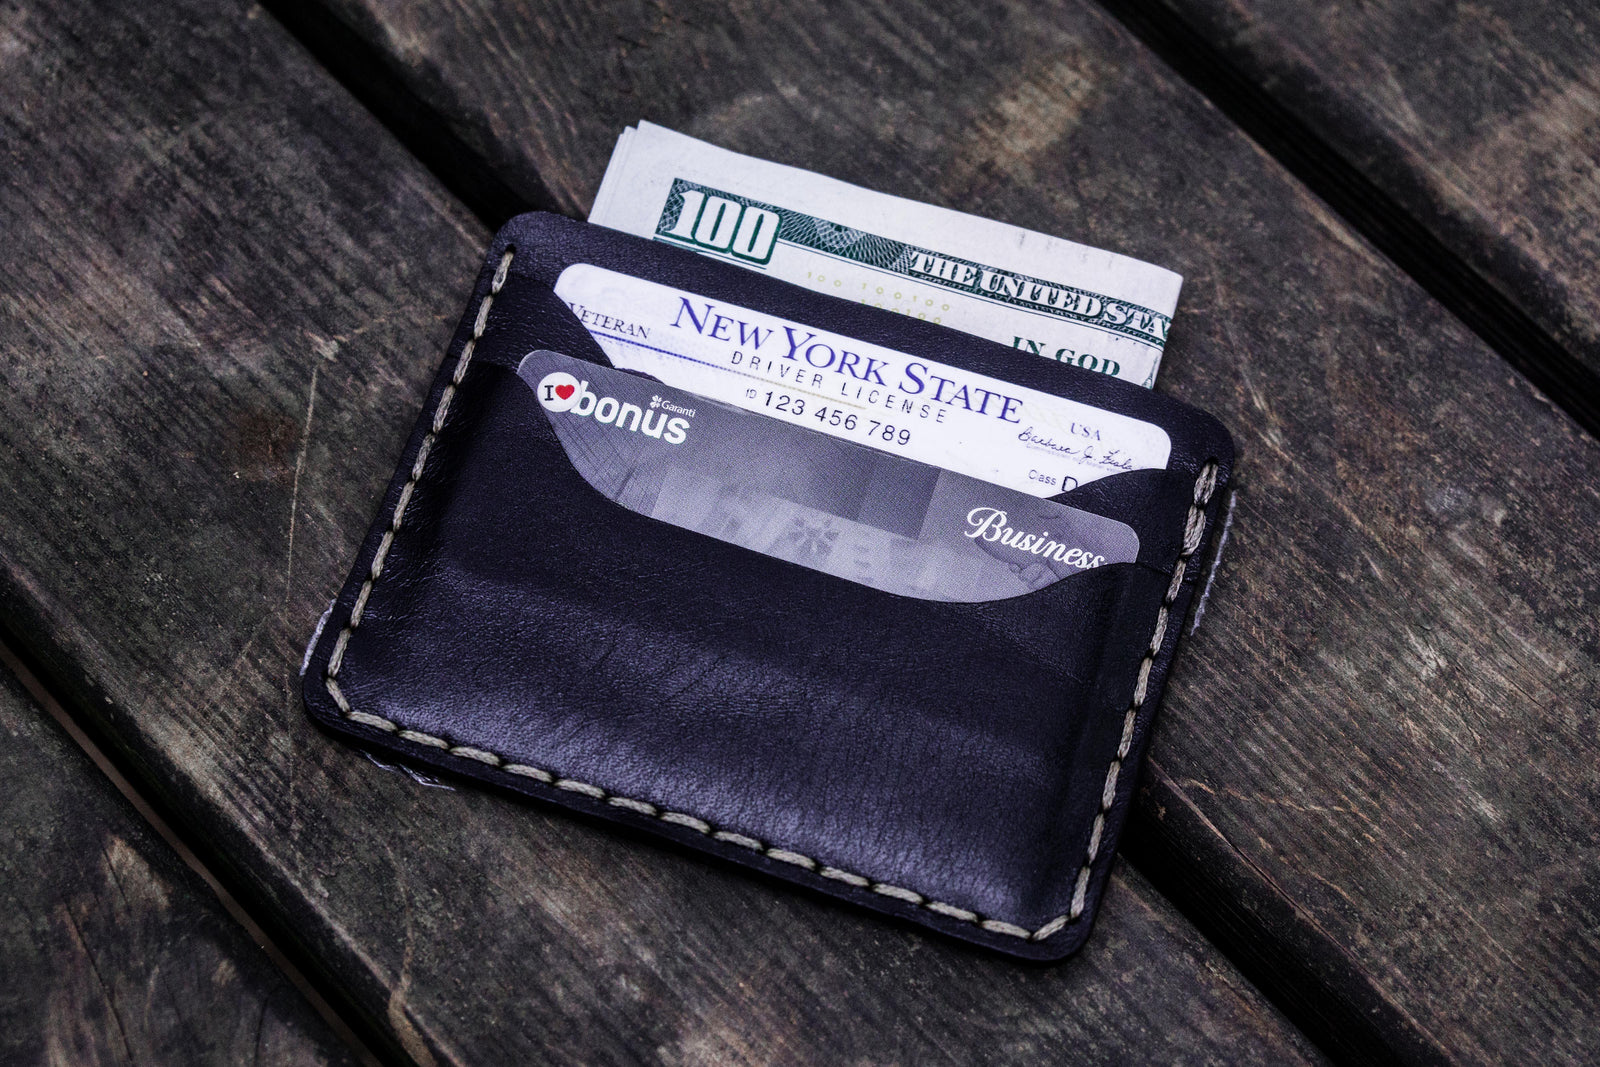  iN. Slim credit card holder wallet, Gift card display